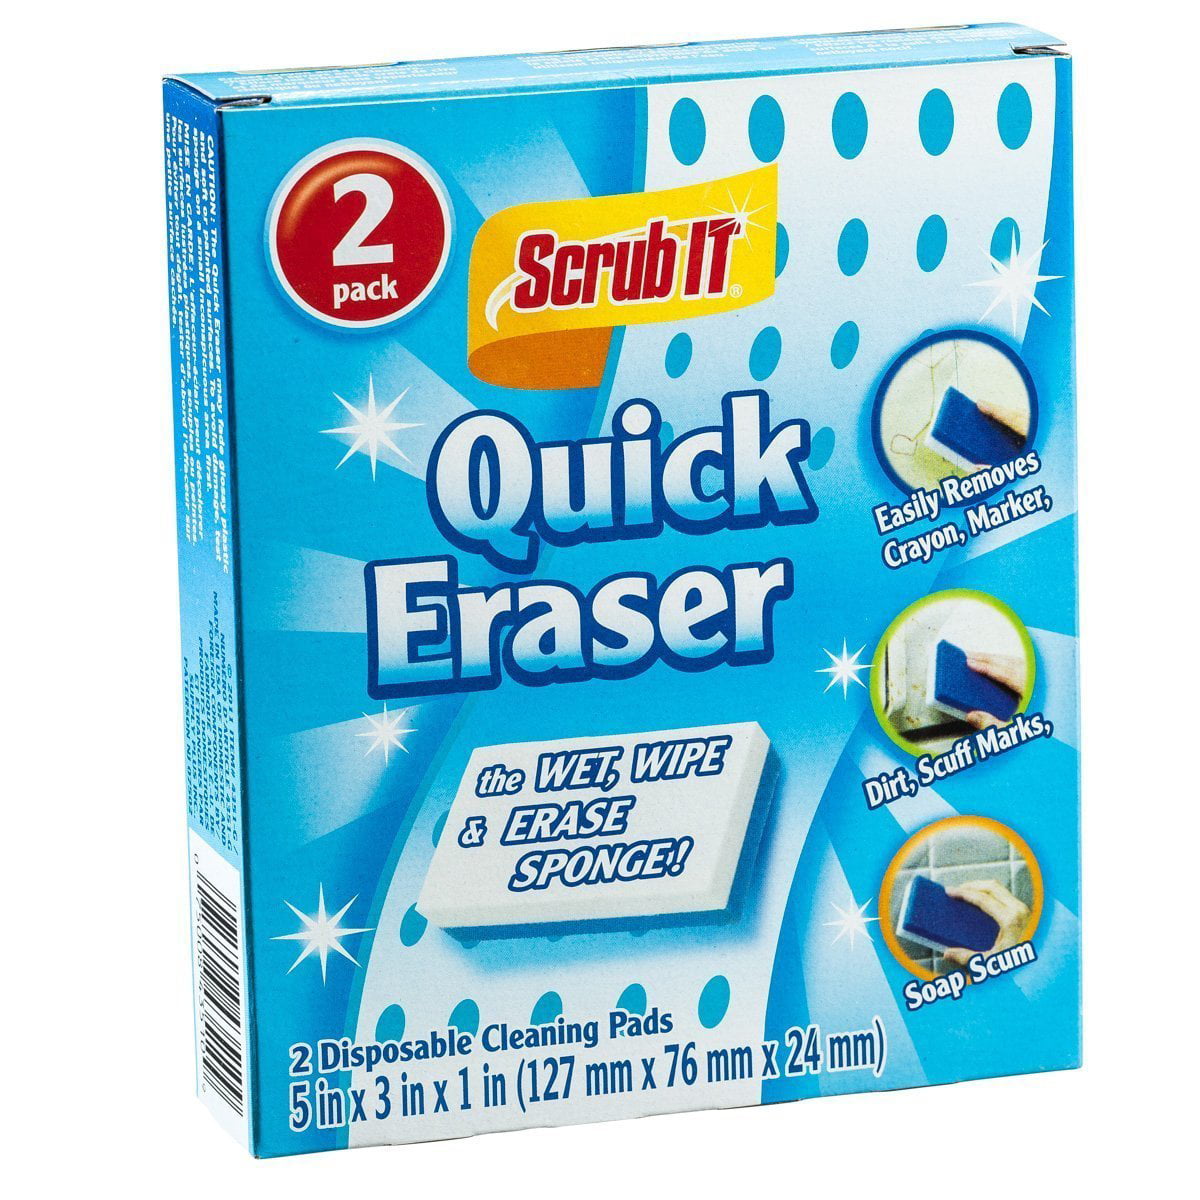 Skateboard Cleaner Eraser C Lightweight Wipe Eraser Cleaning Kit,